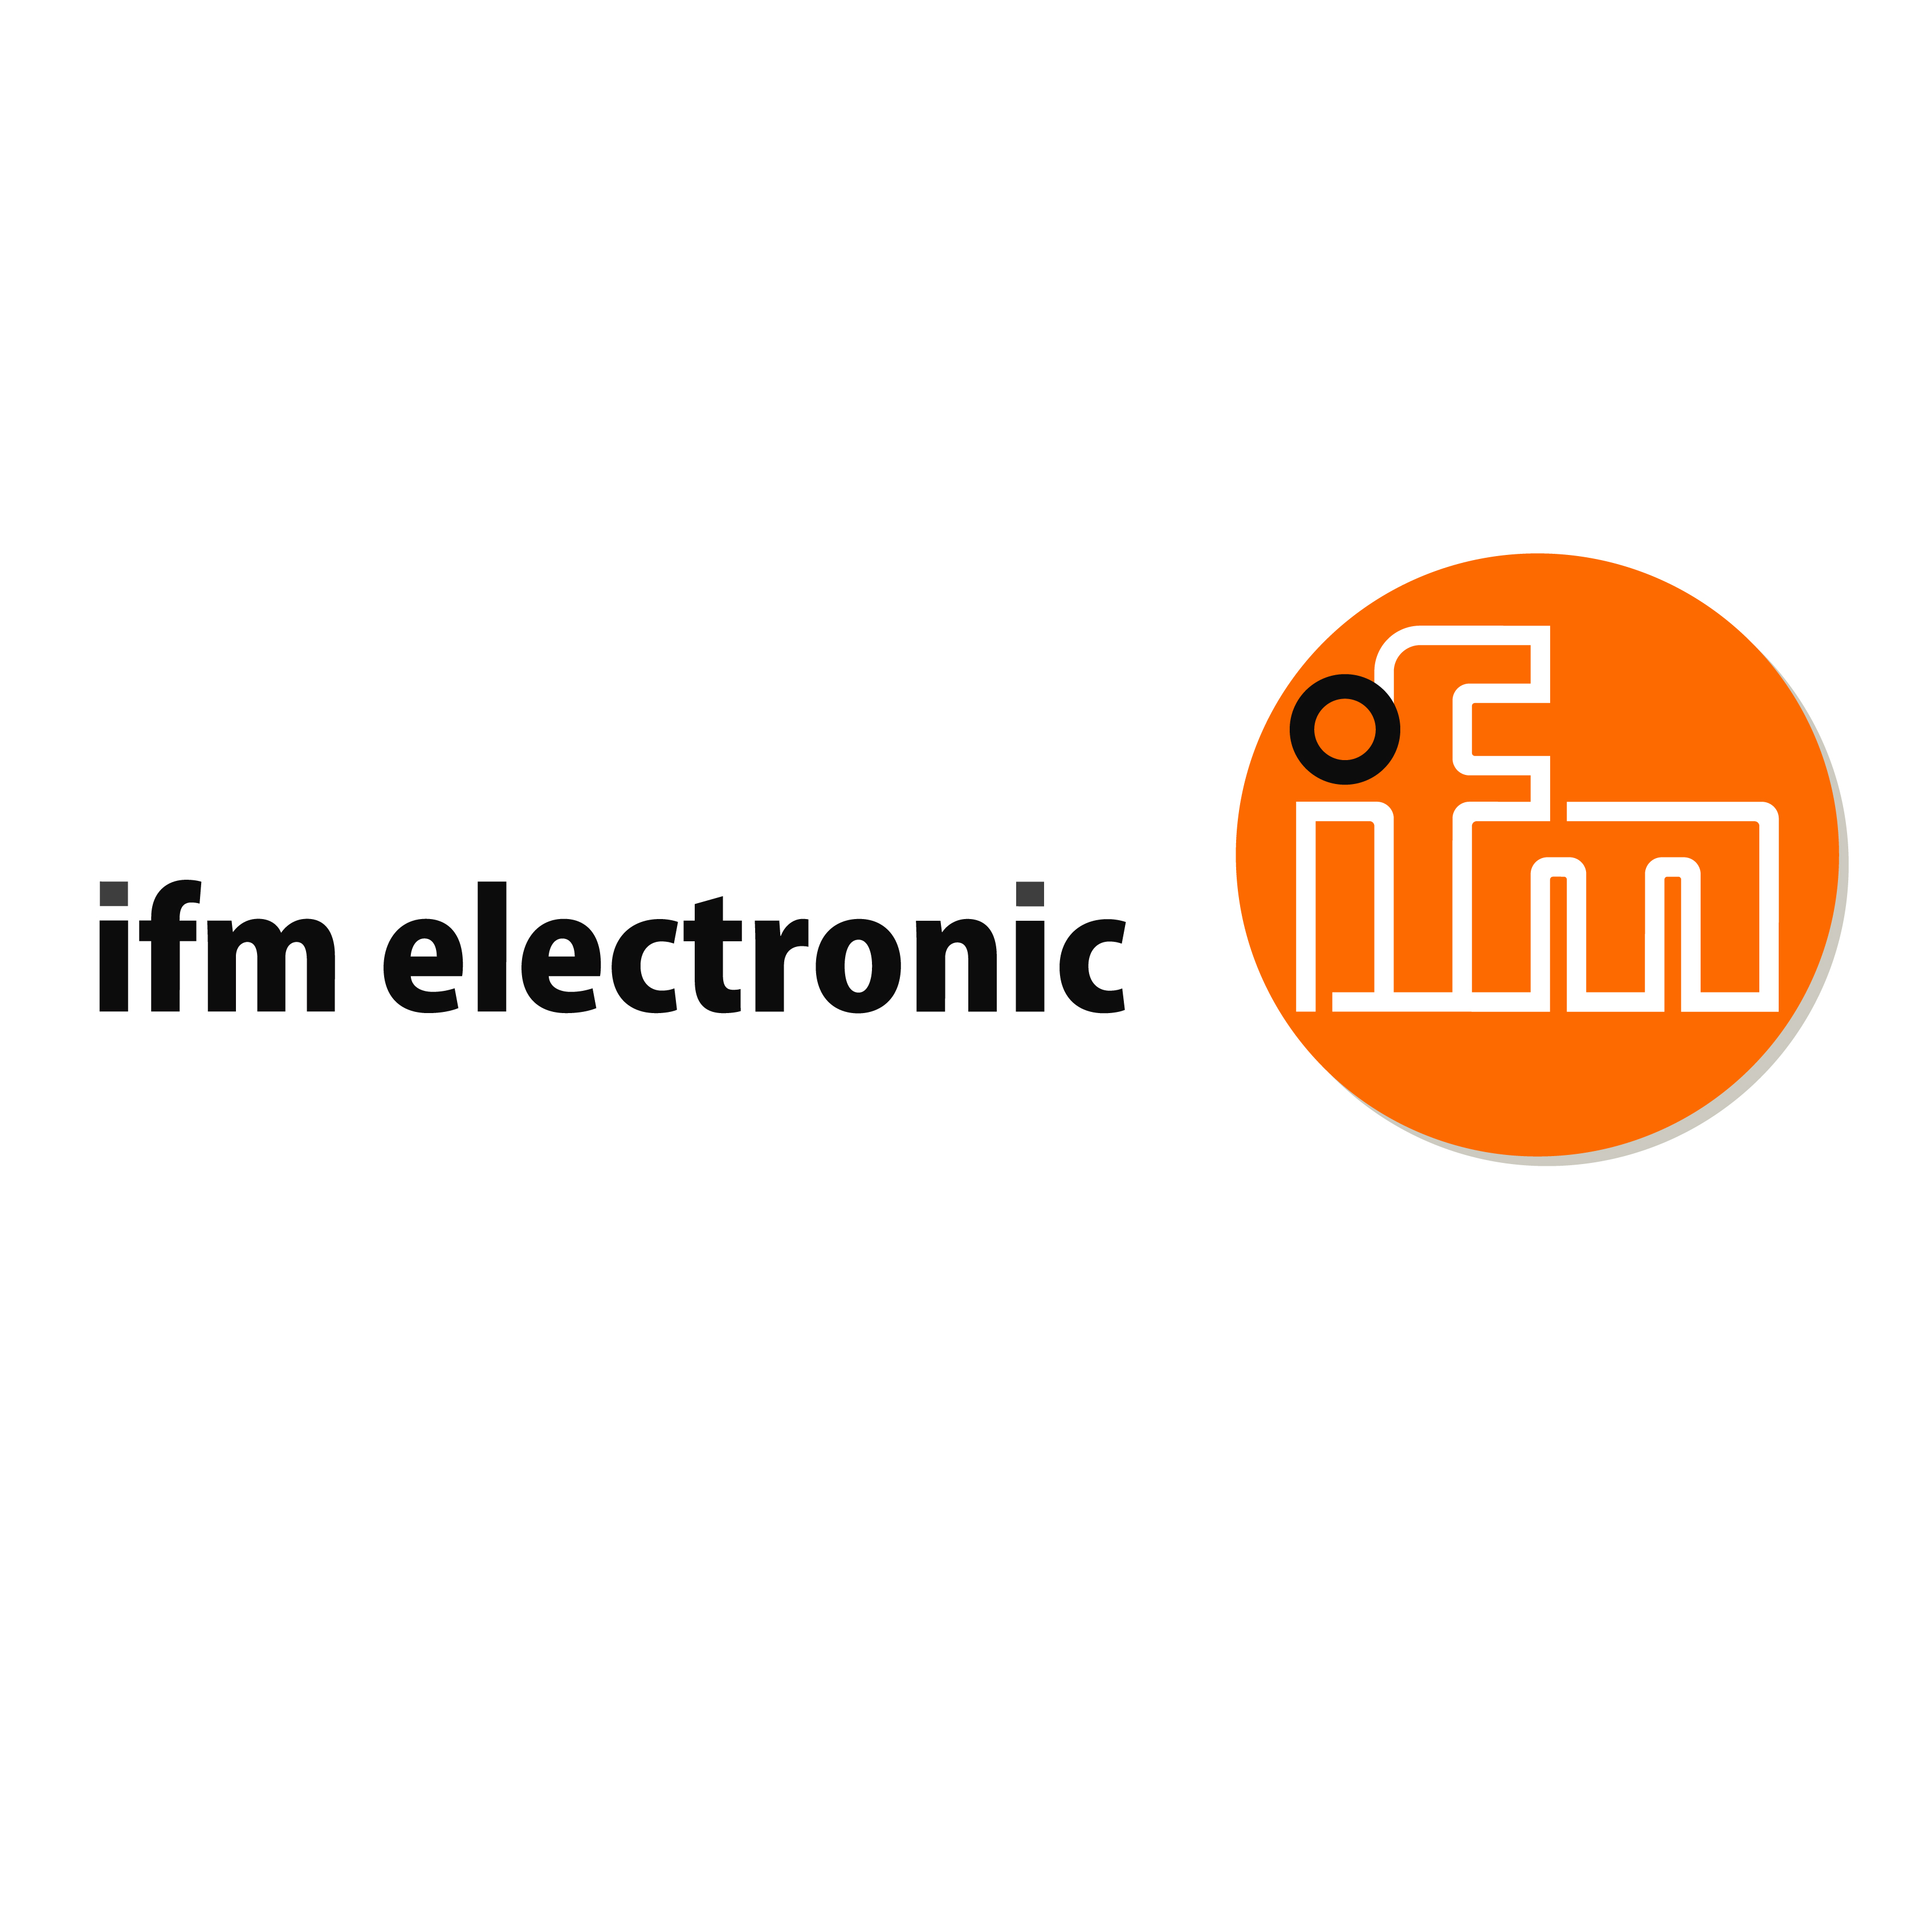 IFM ELECTRONIC